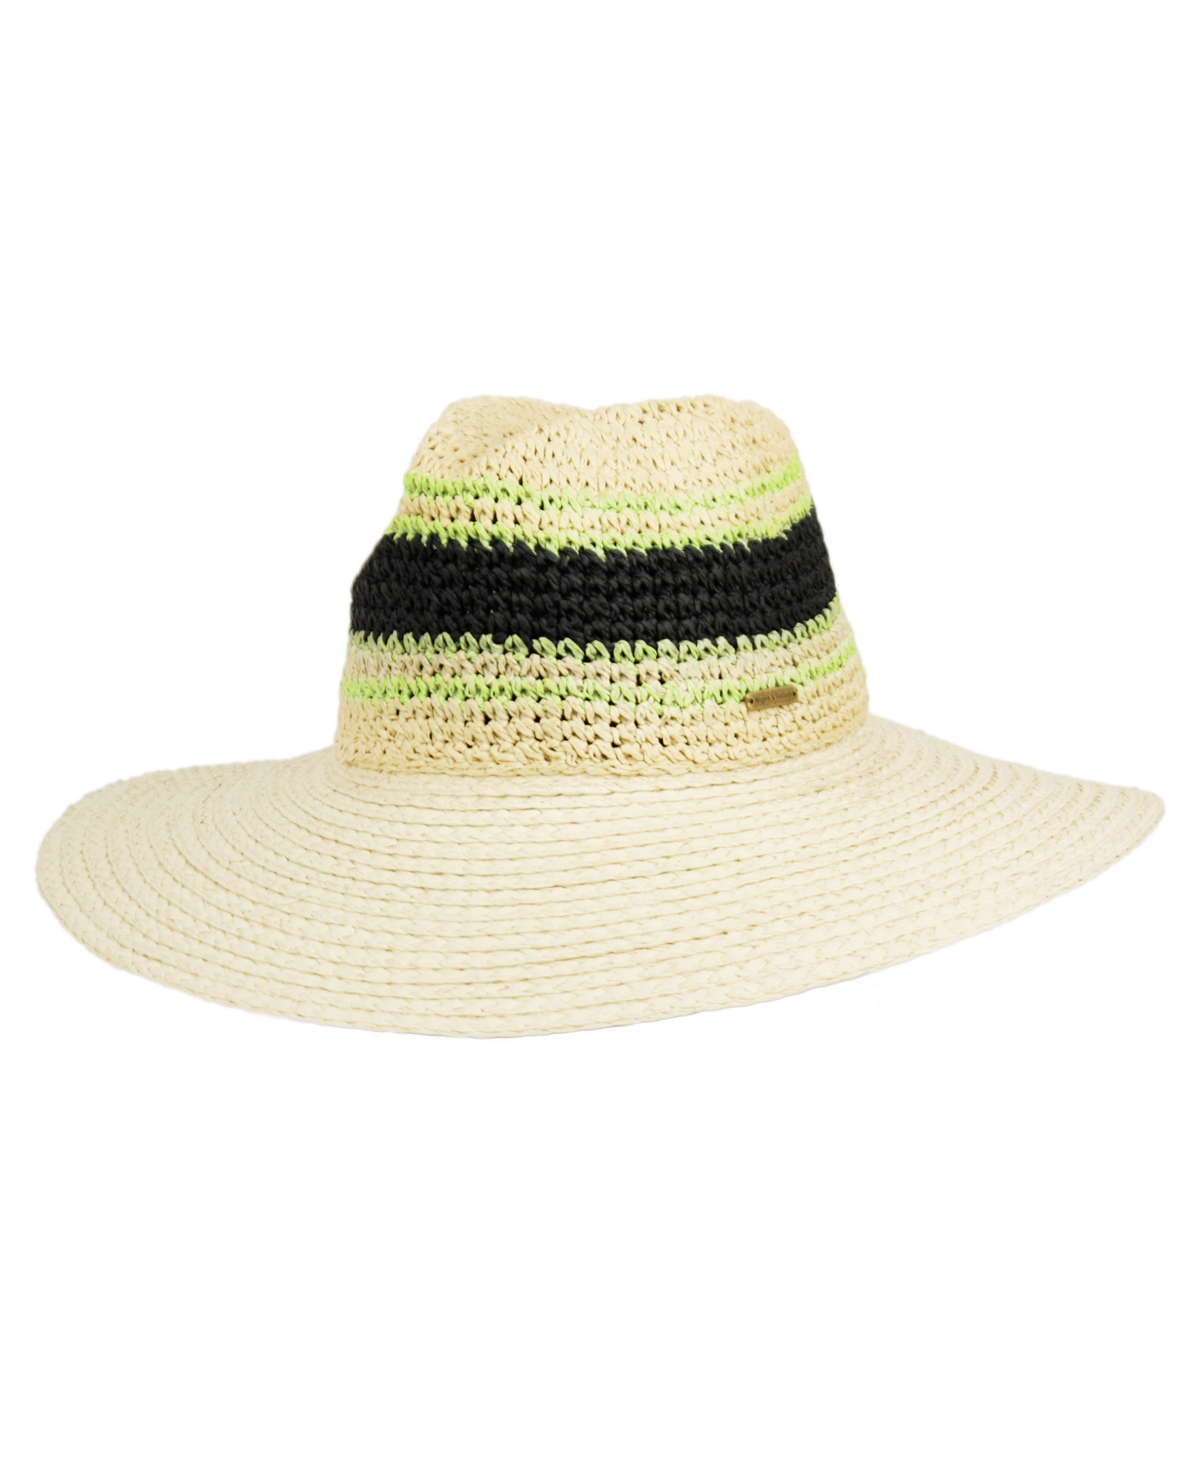 Straw Panama Fedora Sun Hat - Natural